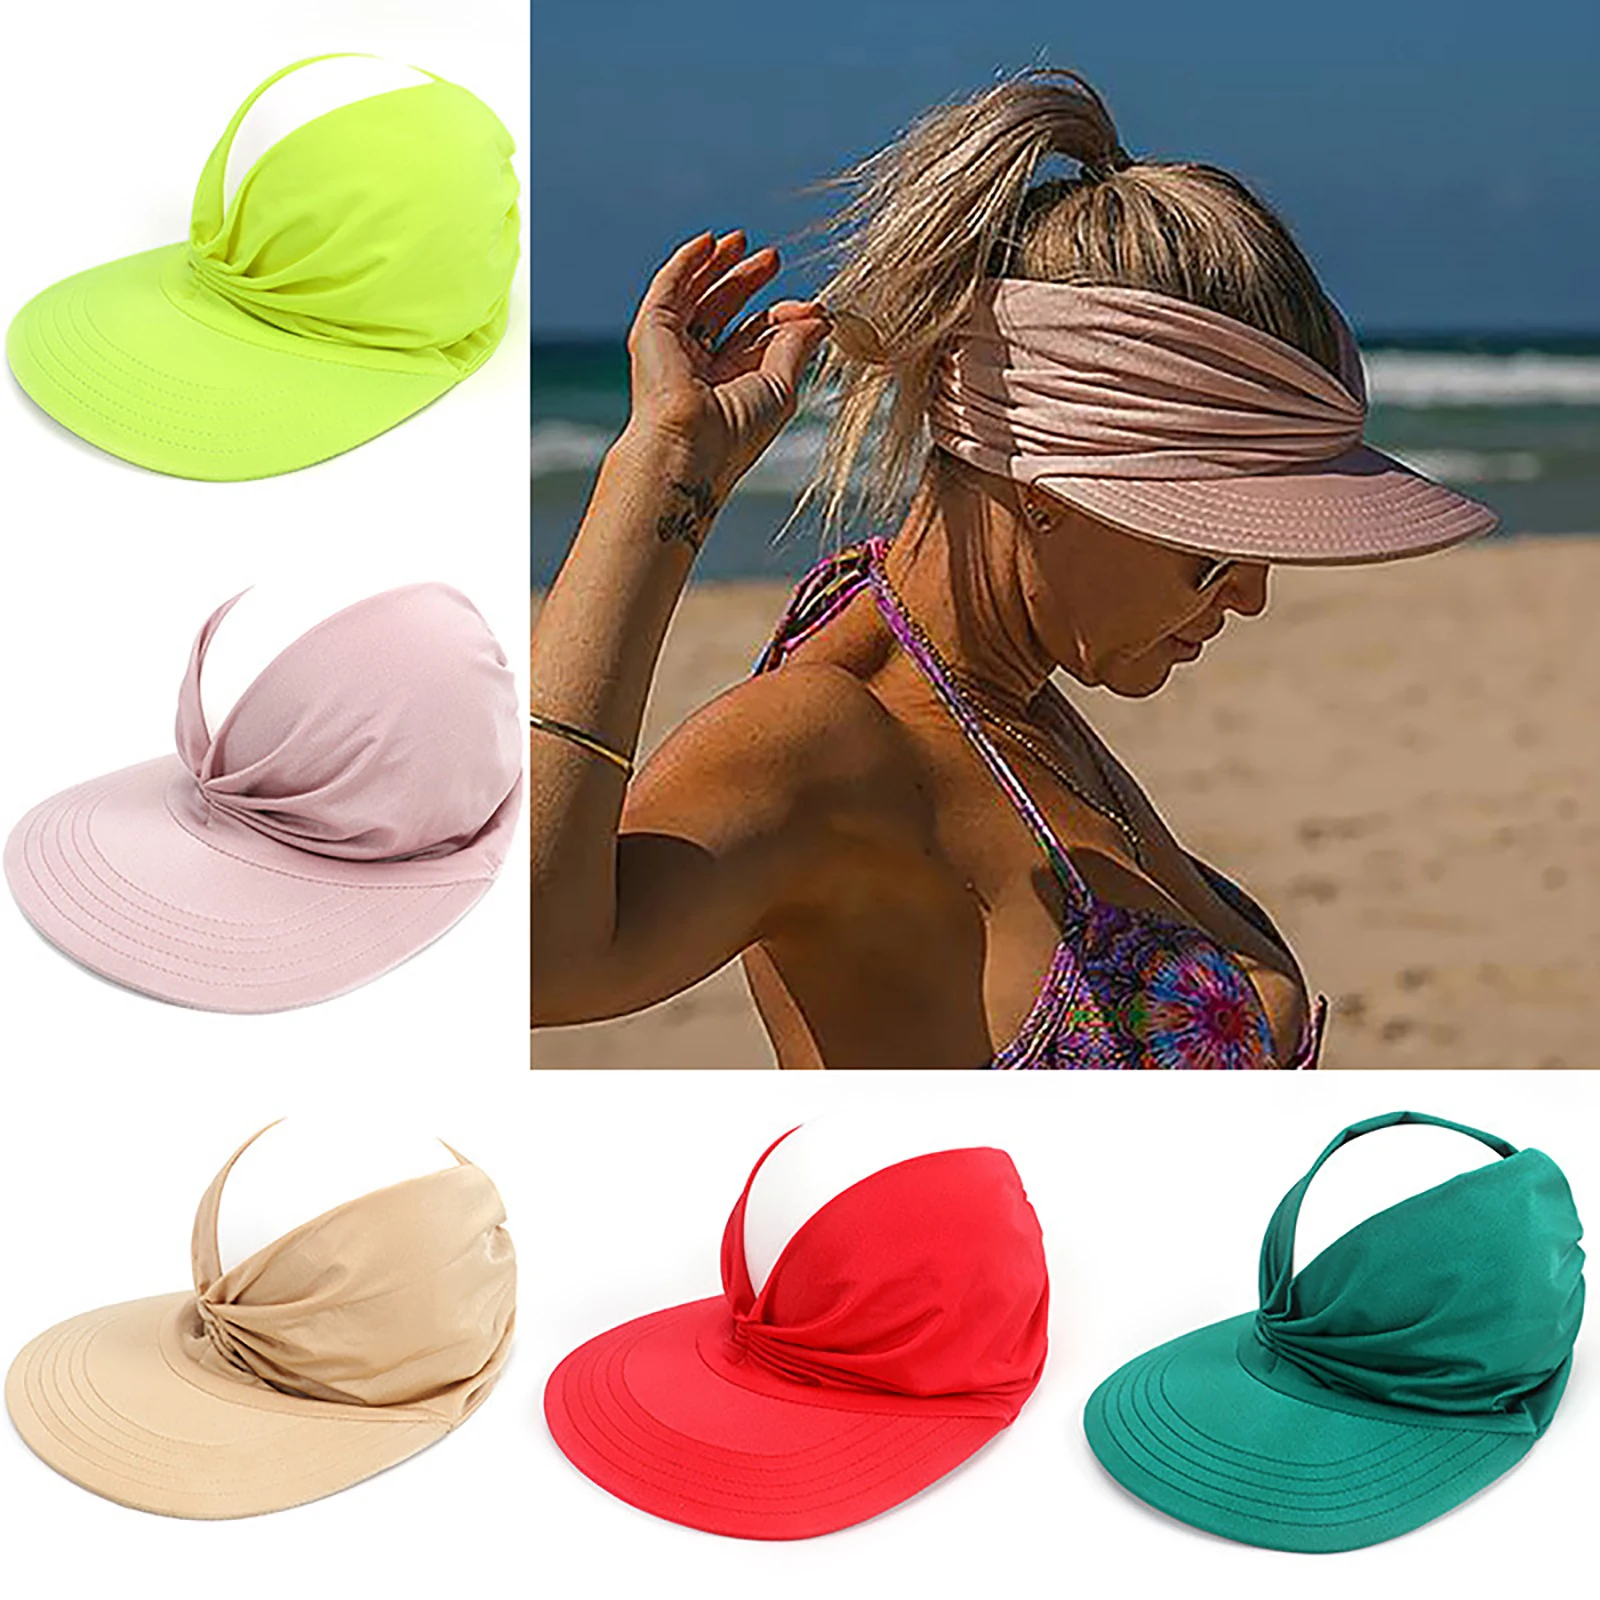 

New Arrival Summer Hat Women's Sun Visor Sun Hat Anti-ultraviolet Elastic Hollow Top Hat New Casual Caps Gorras wide-brimmed